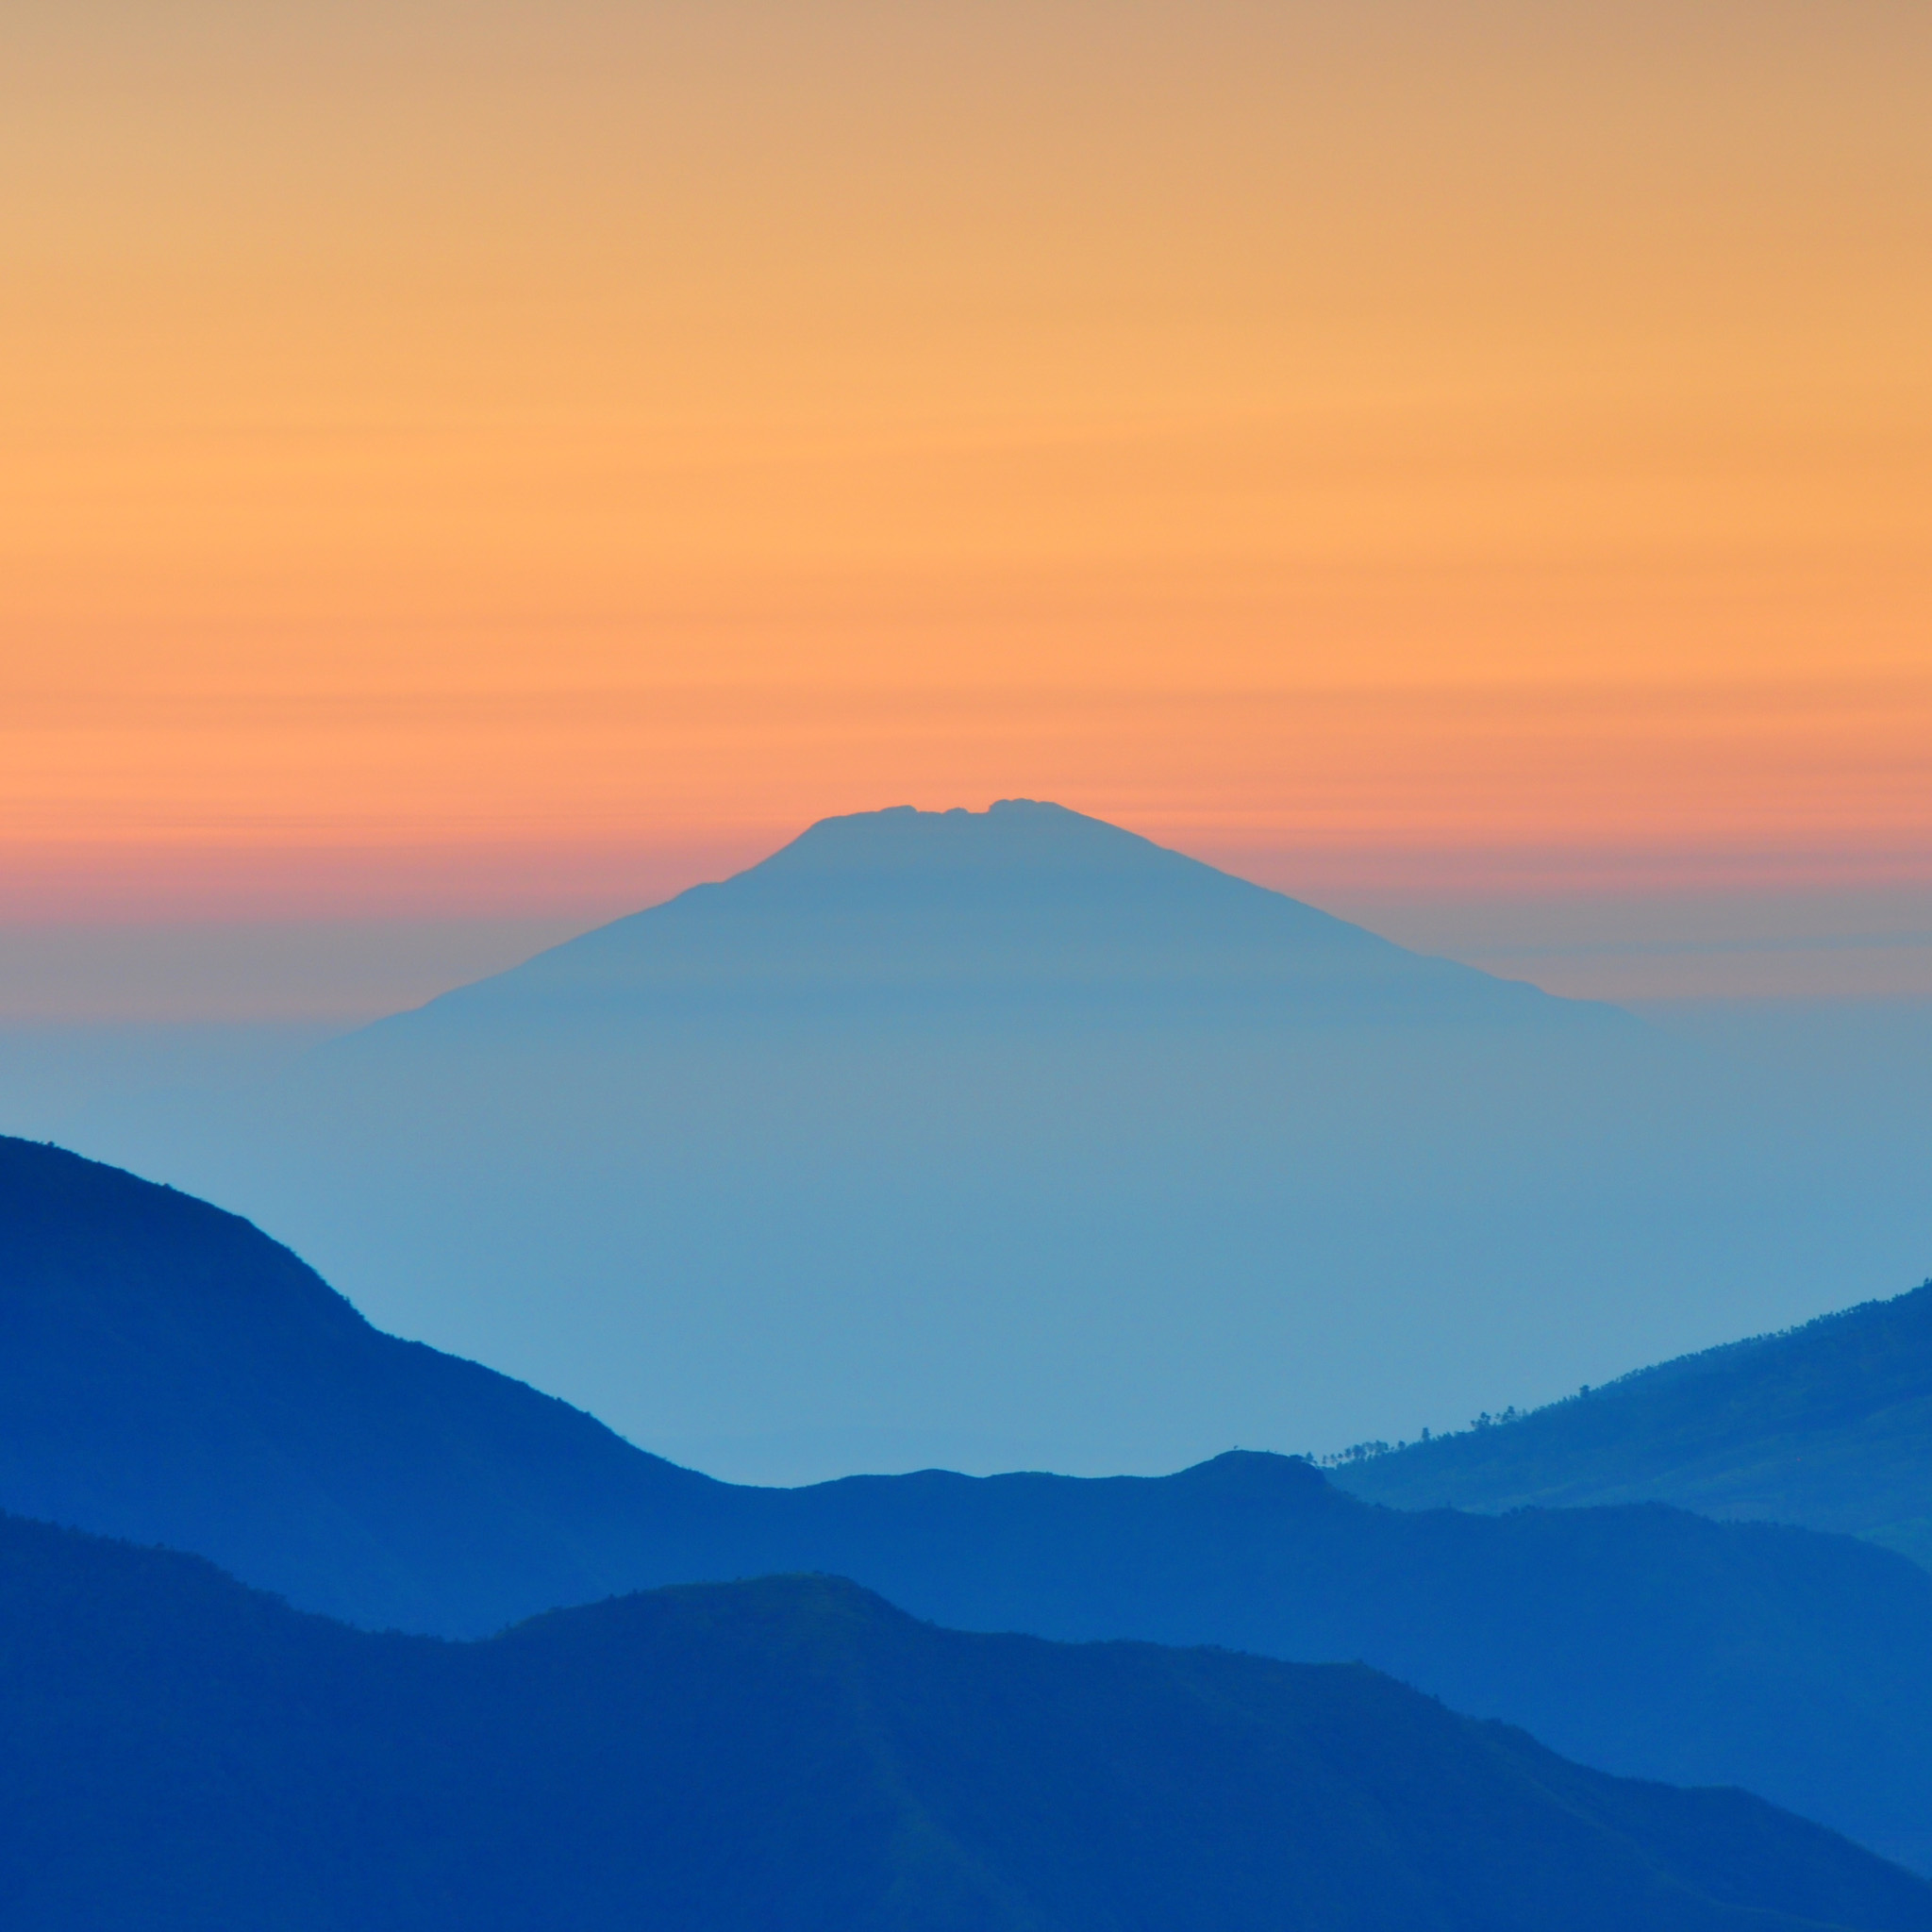 Blue Mountains Orange Sky Landscape iPad Wallpaper